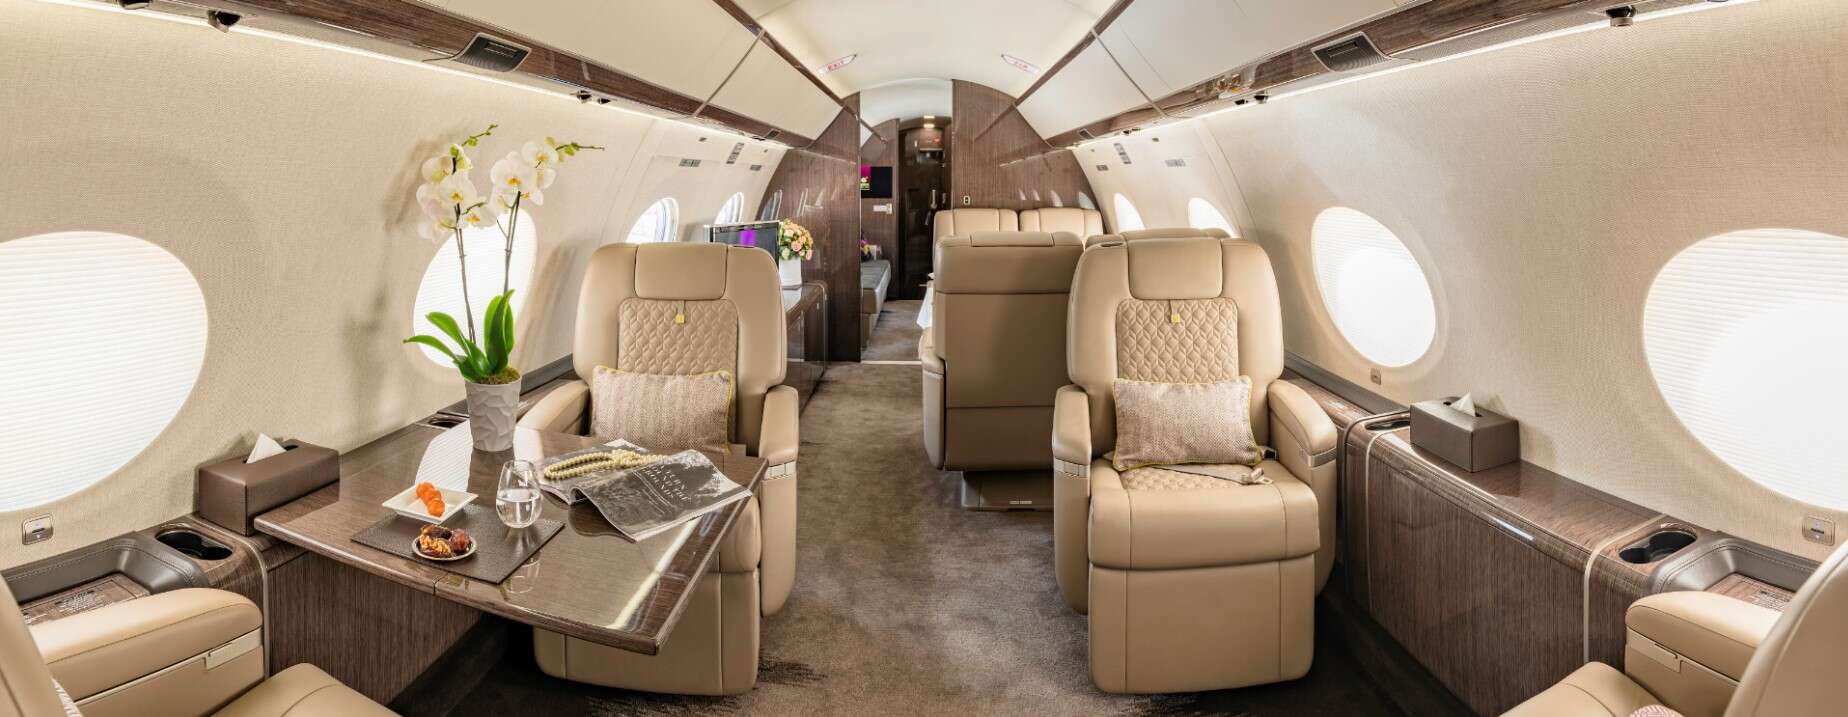 Qatar Executive interior G650ER